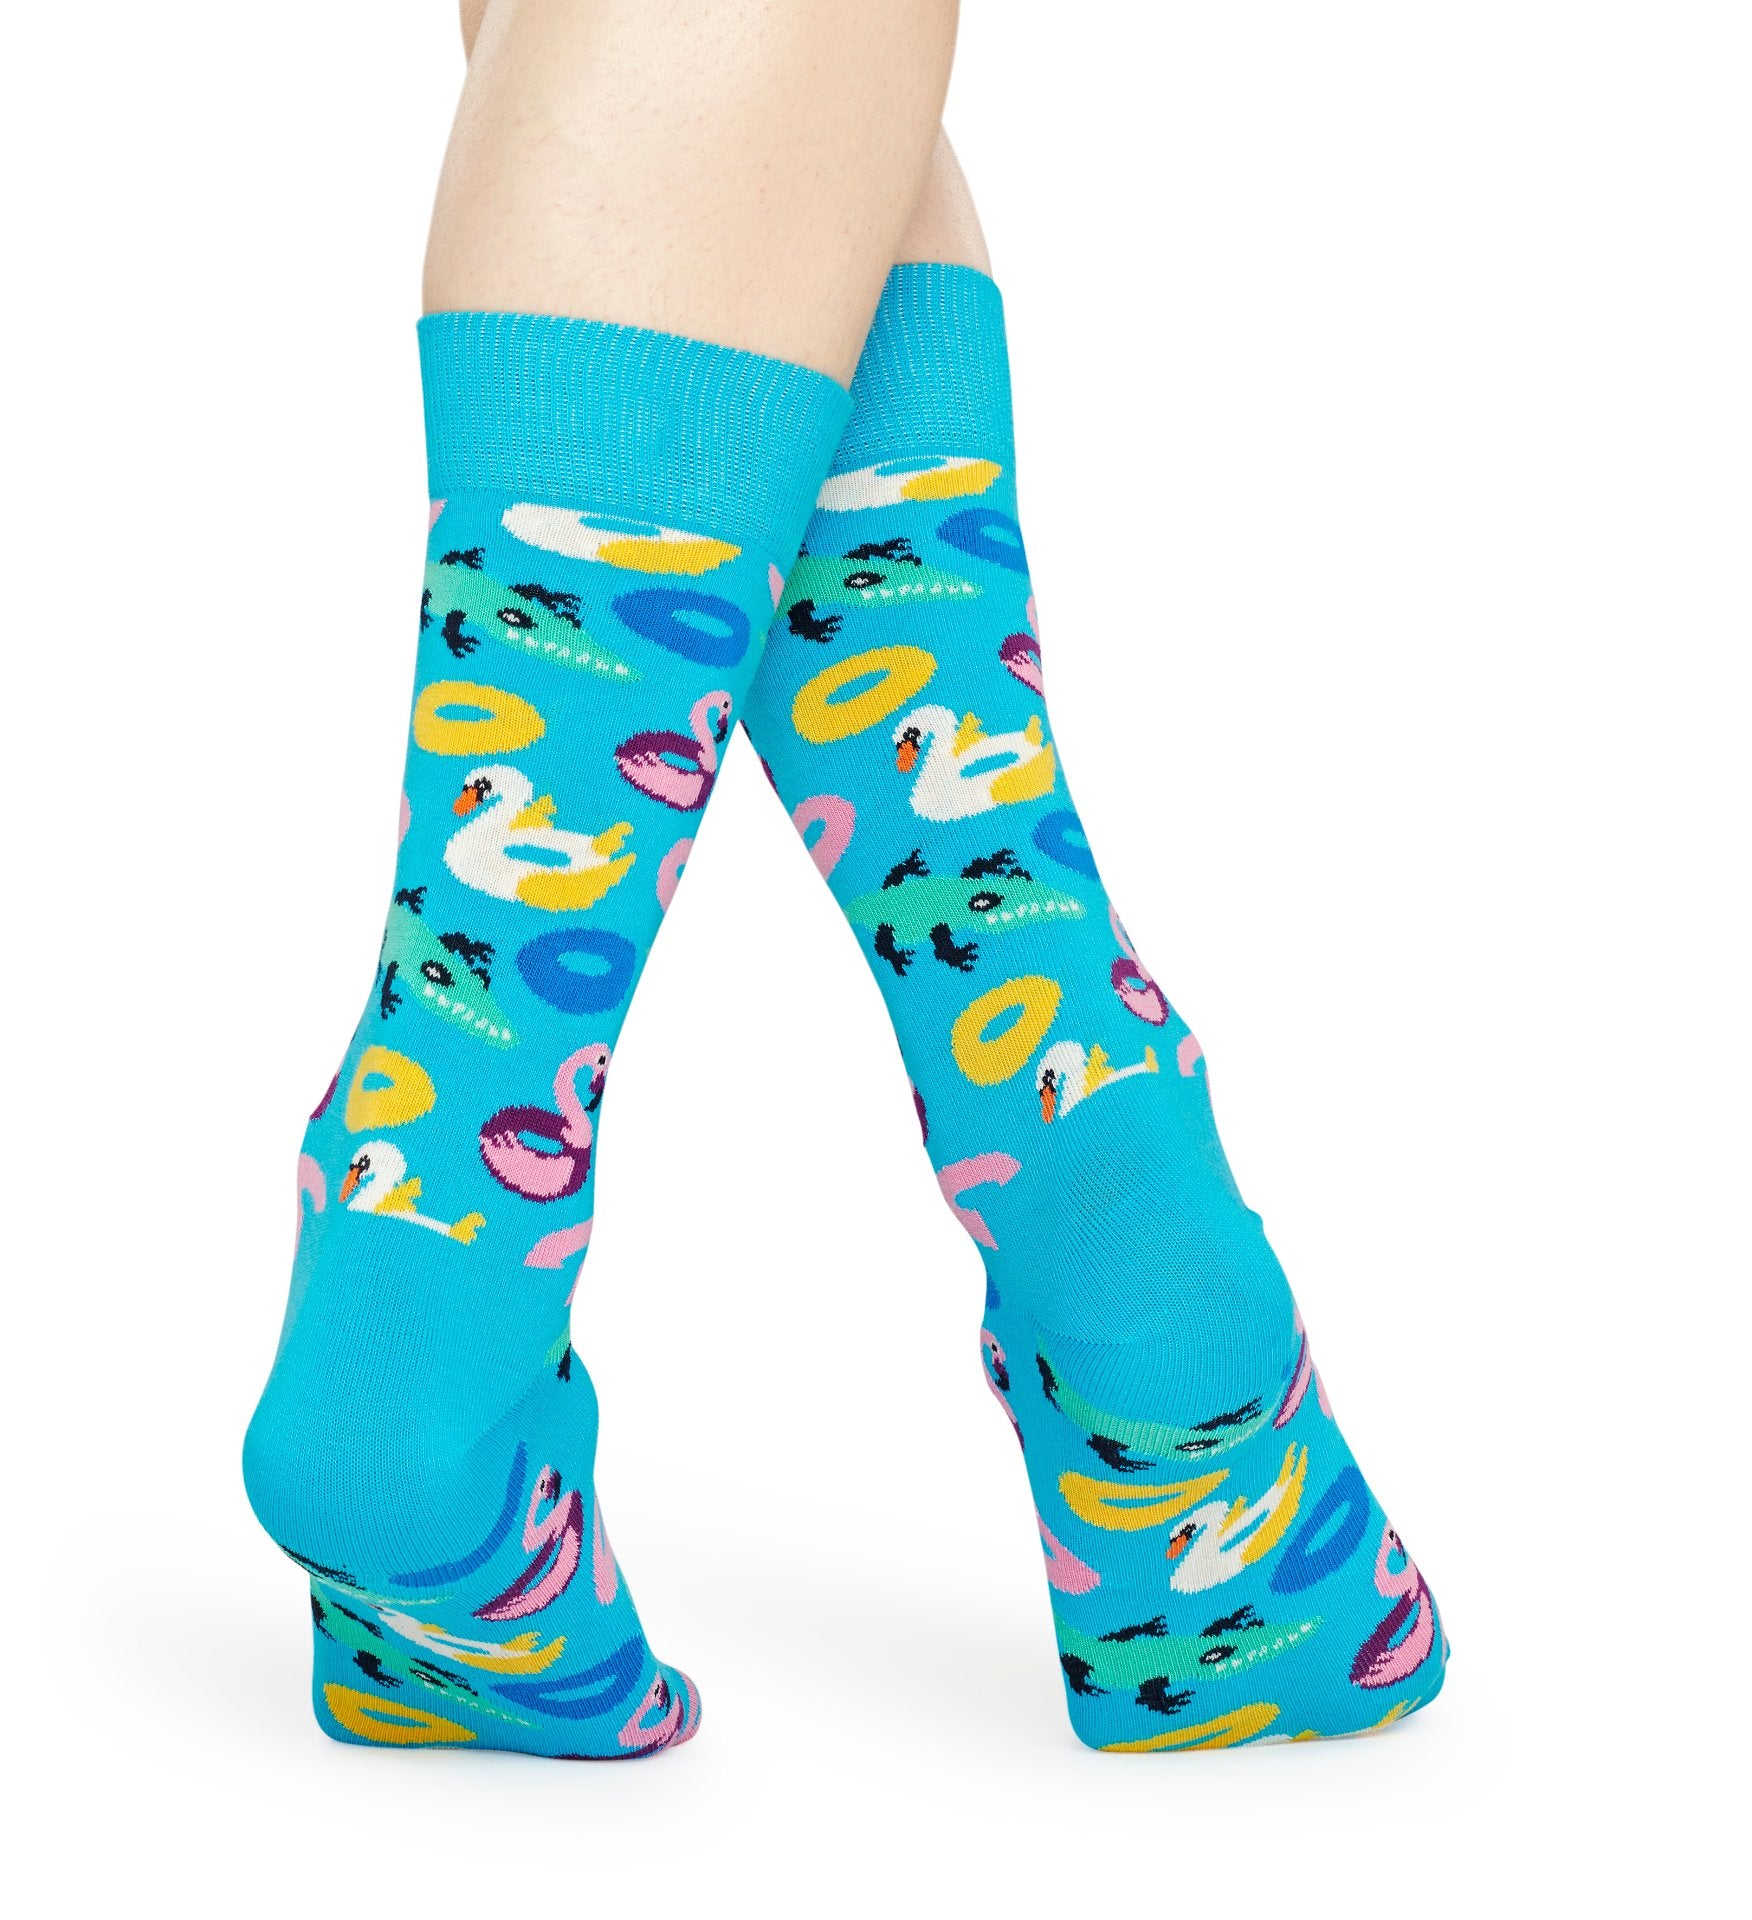 Modré ponožky Happy Socks s nafukovacími zvířátky, vzor Pool Party